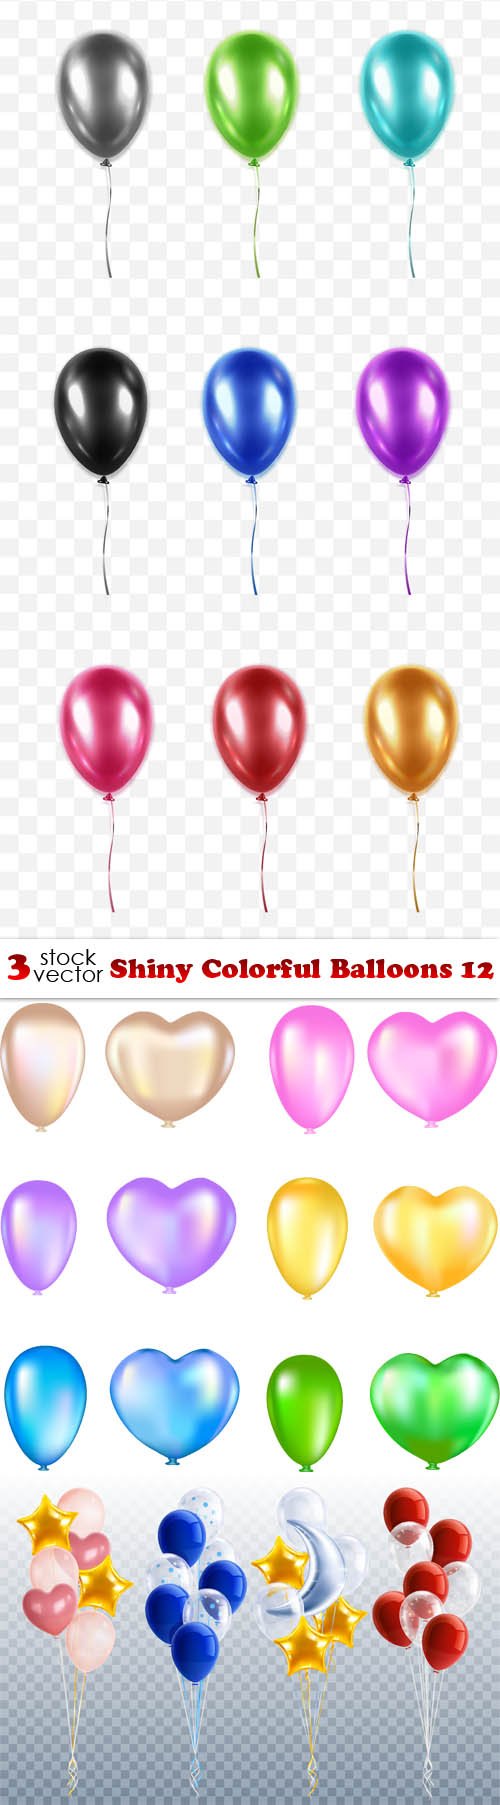 Vectors - Shiny Colorful Balloons 12